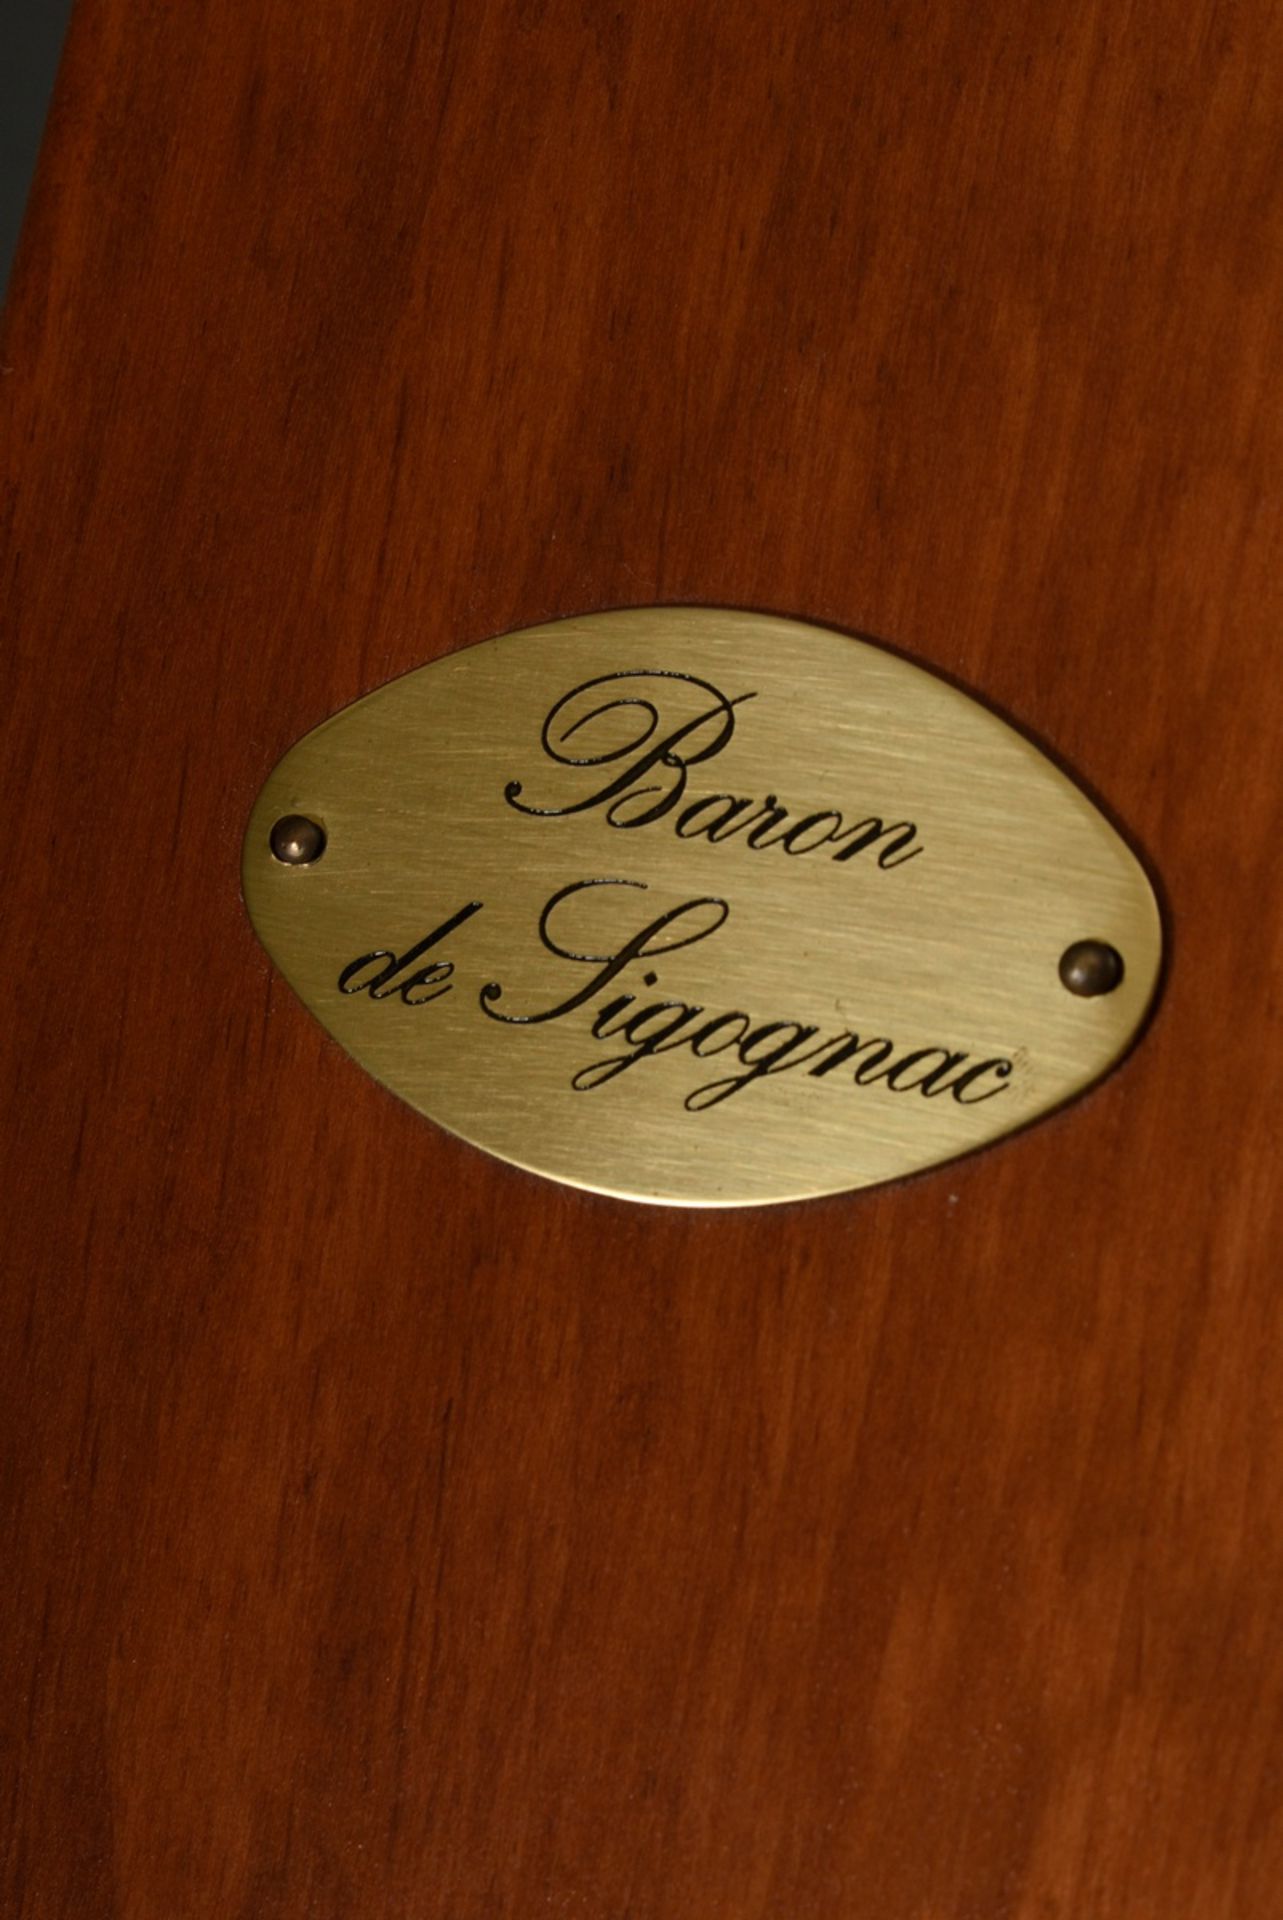 Bottle of Armagnac "Baron de Sigognac" 1923, in original wooden box with brass label, Gers, France, - Image 7 of 7